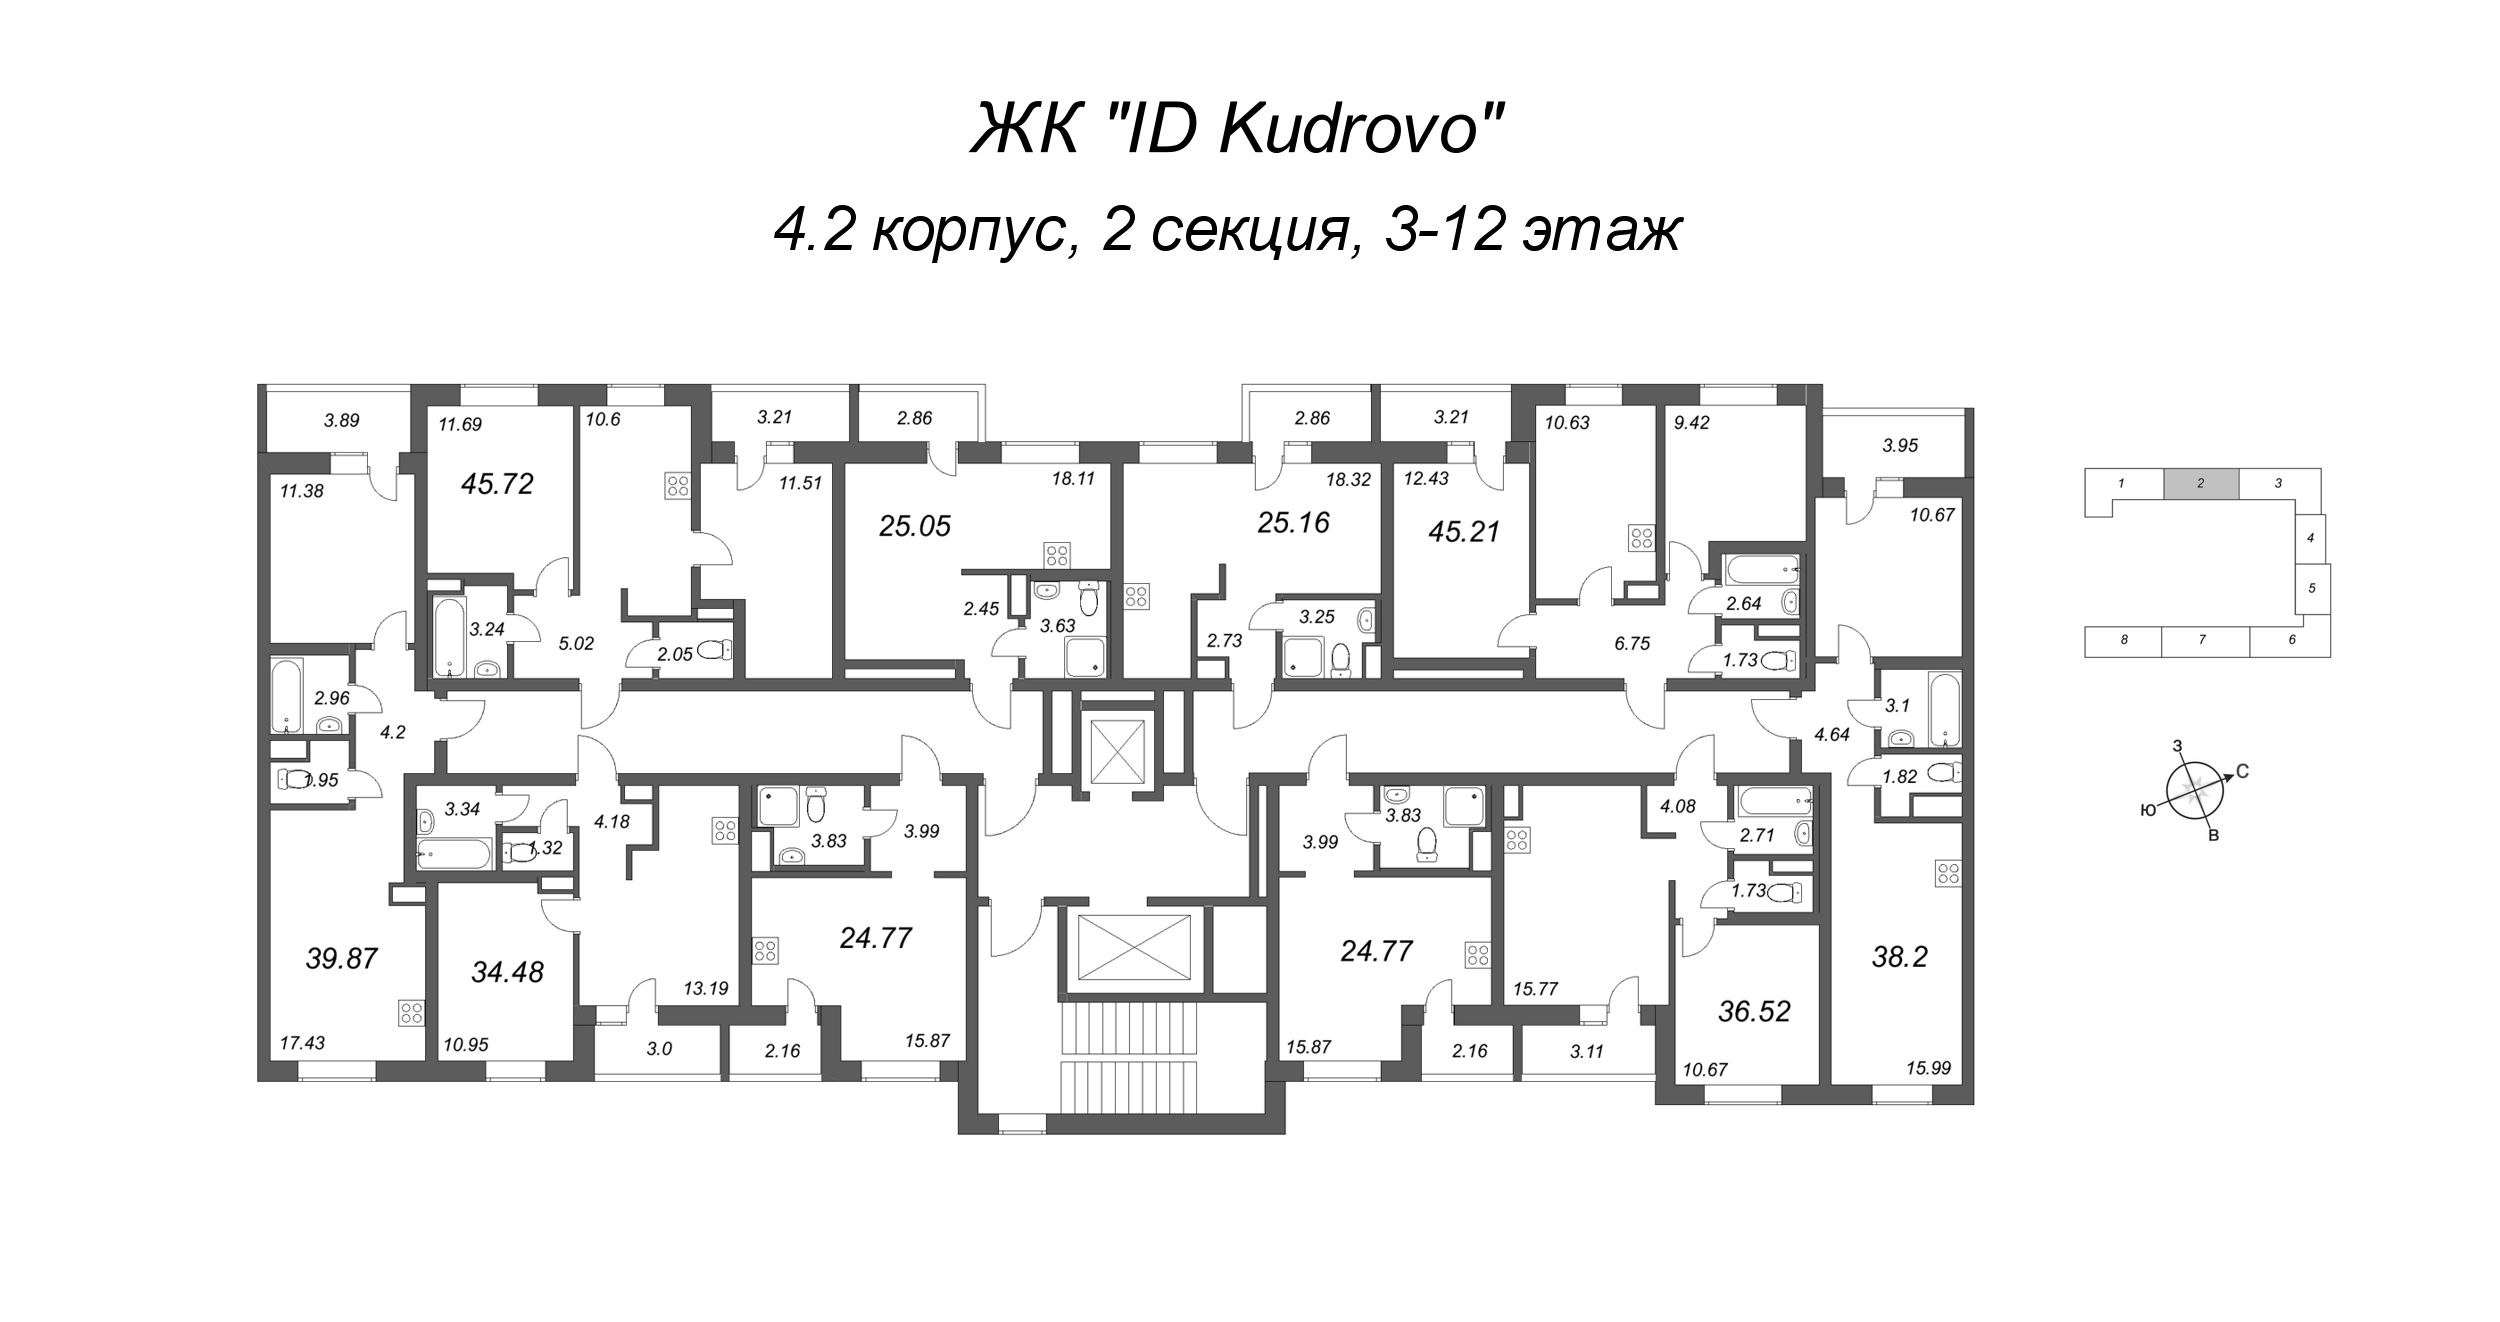 2-комнатная (Евро) квартира, 39.87 м² в ЖК "ID Kudrovo" - планировка этажа